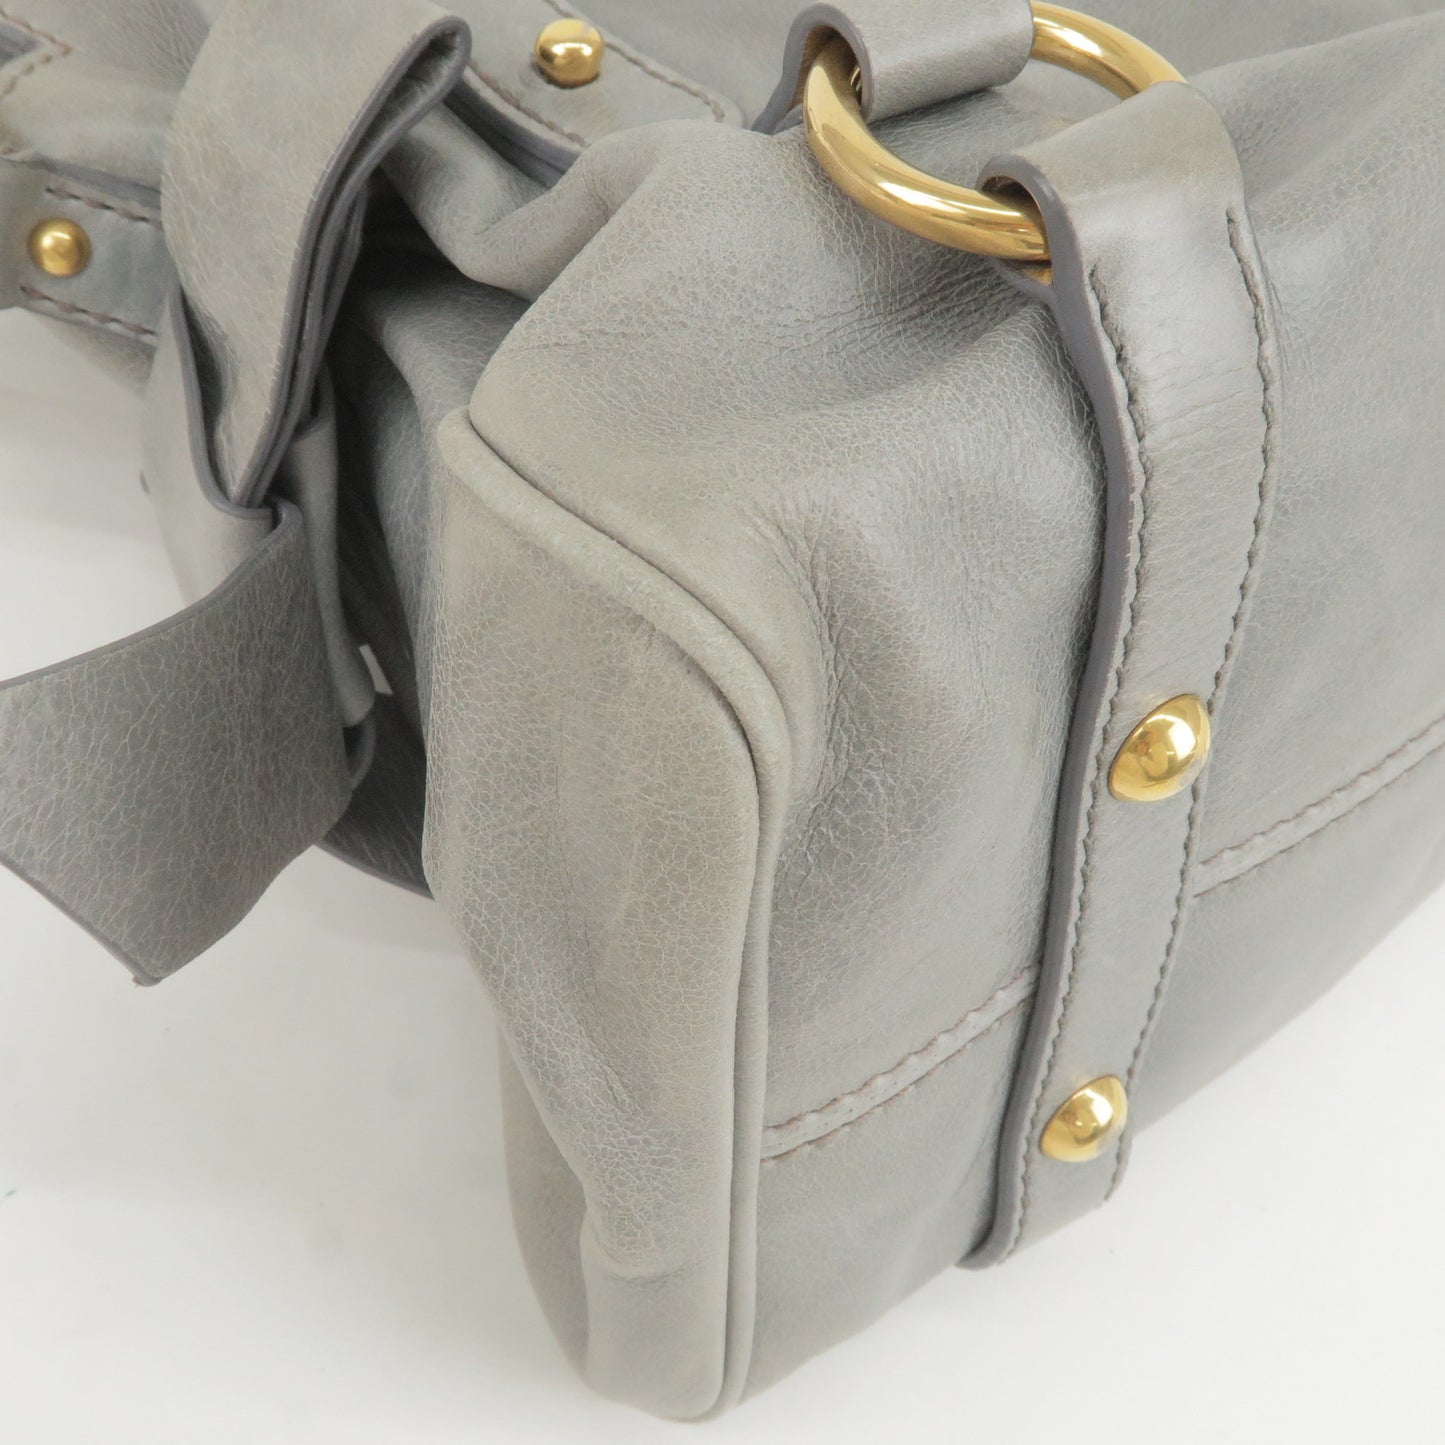 MIU MIU Logo Leather 2Way Bag Shoulder Bag Hand Bag Gray